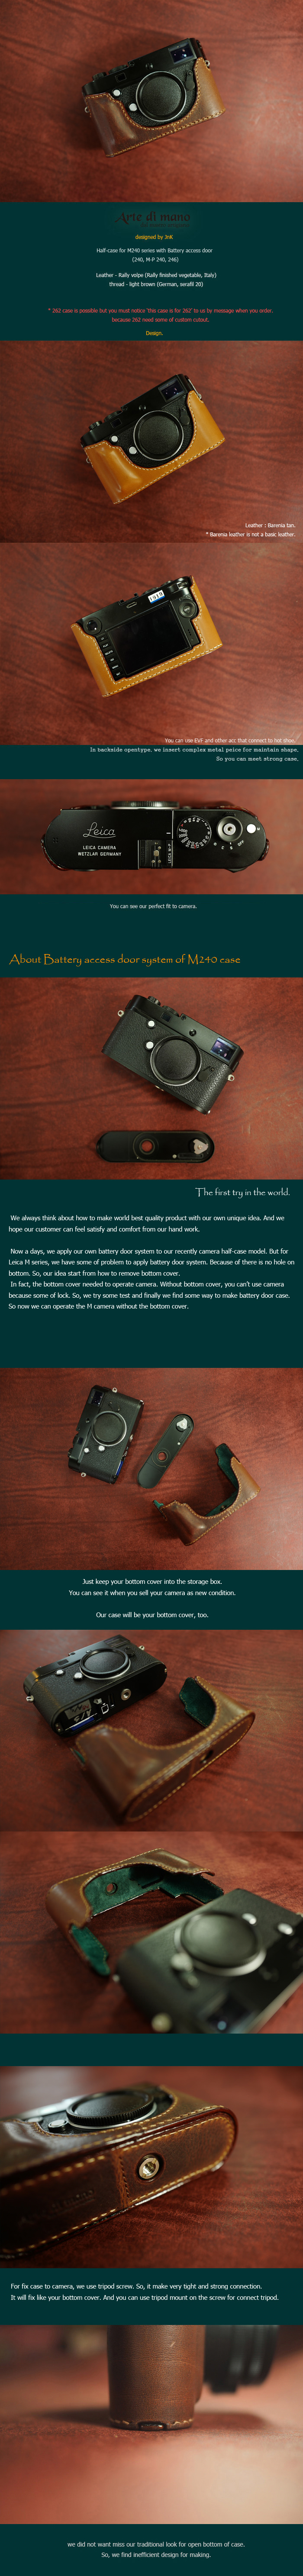 Leica M, M-P (typ240, 246, 262) half case with Battery Access Door